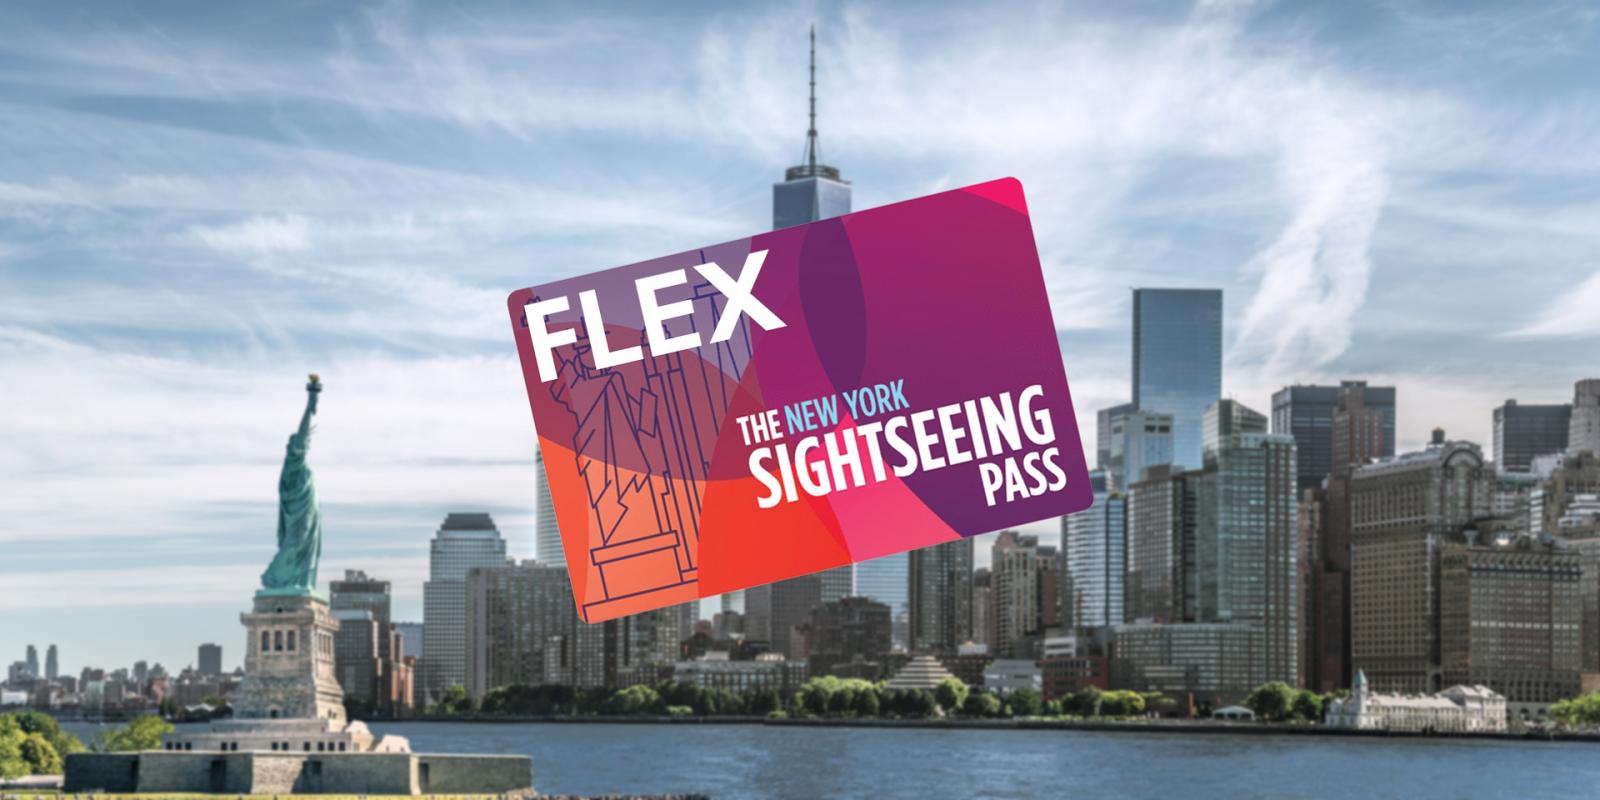 Sightseeing Flex Pass